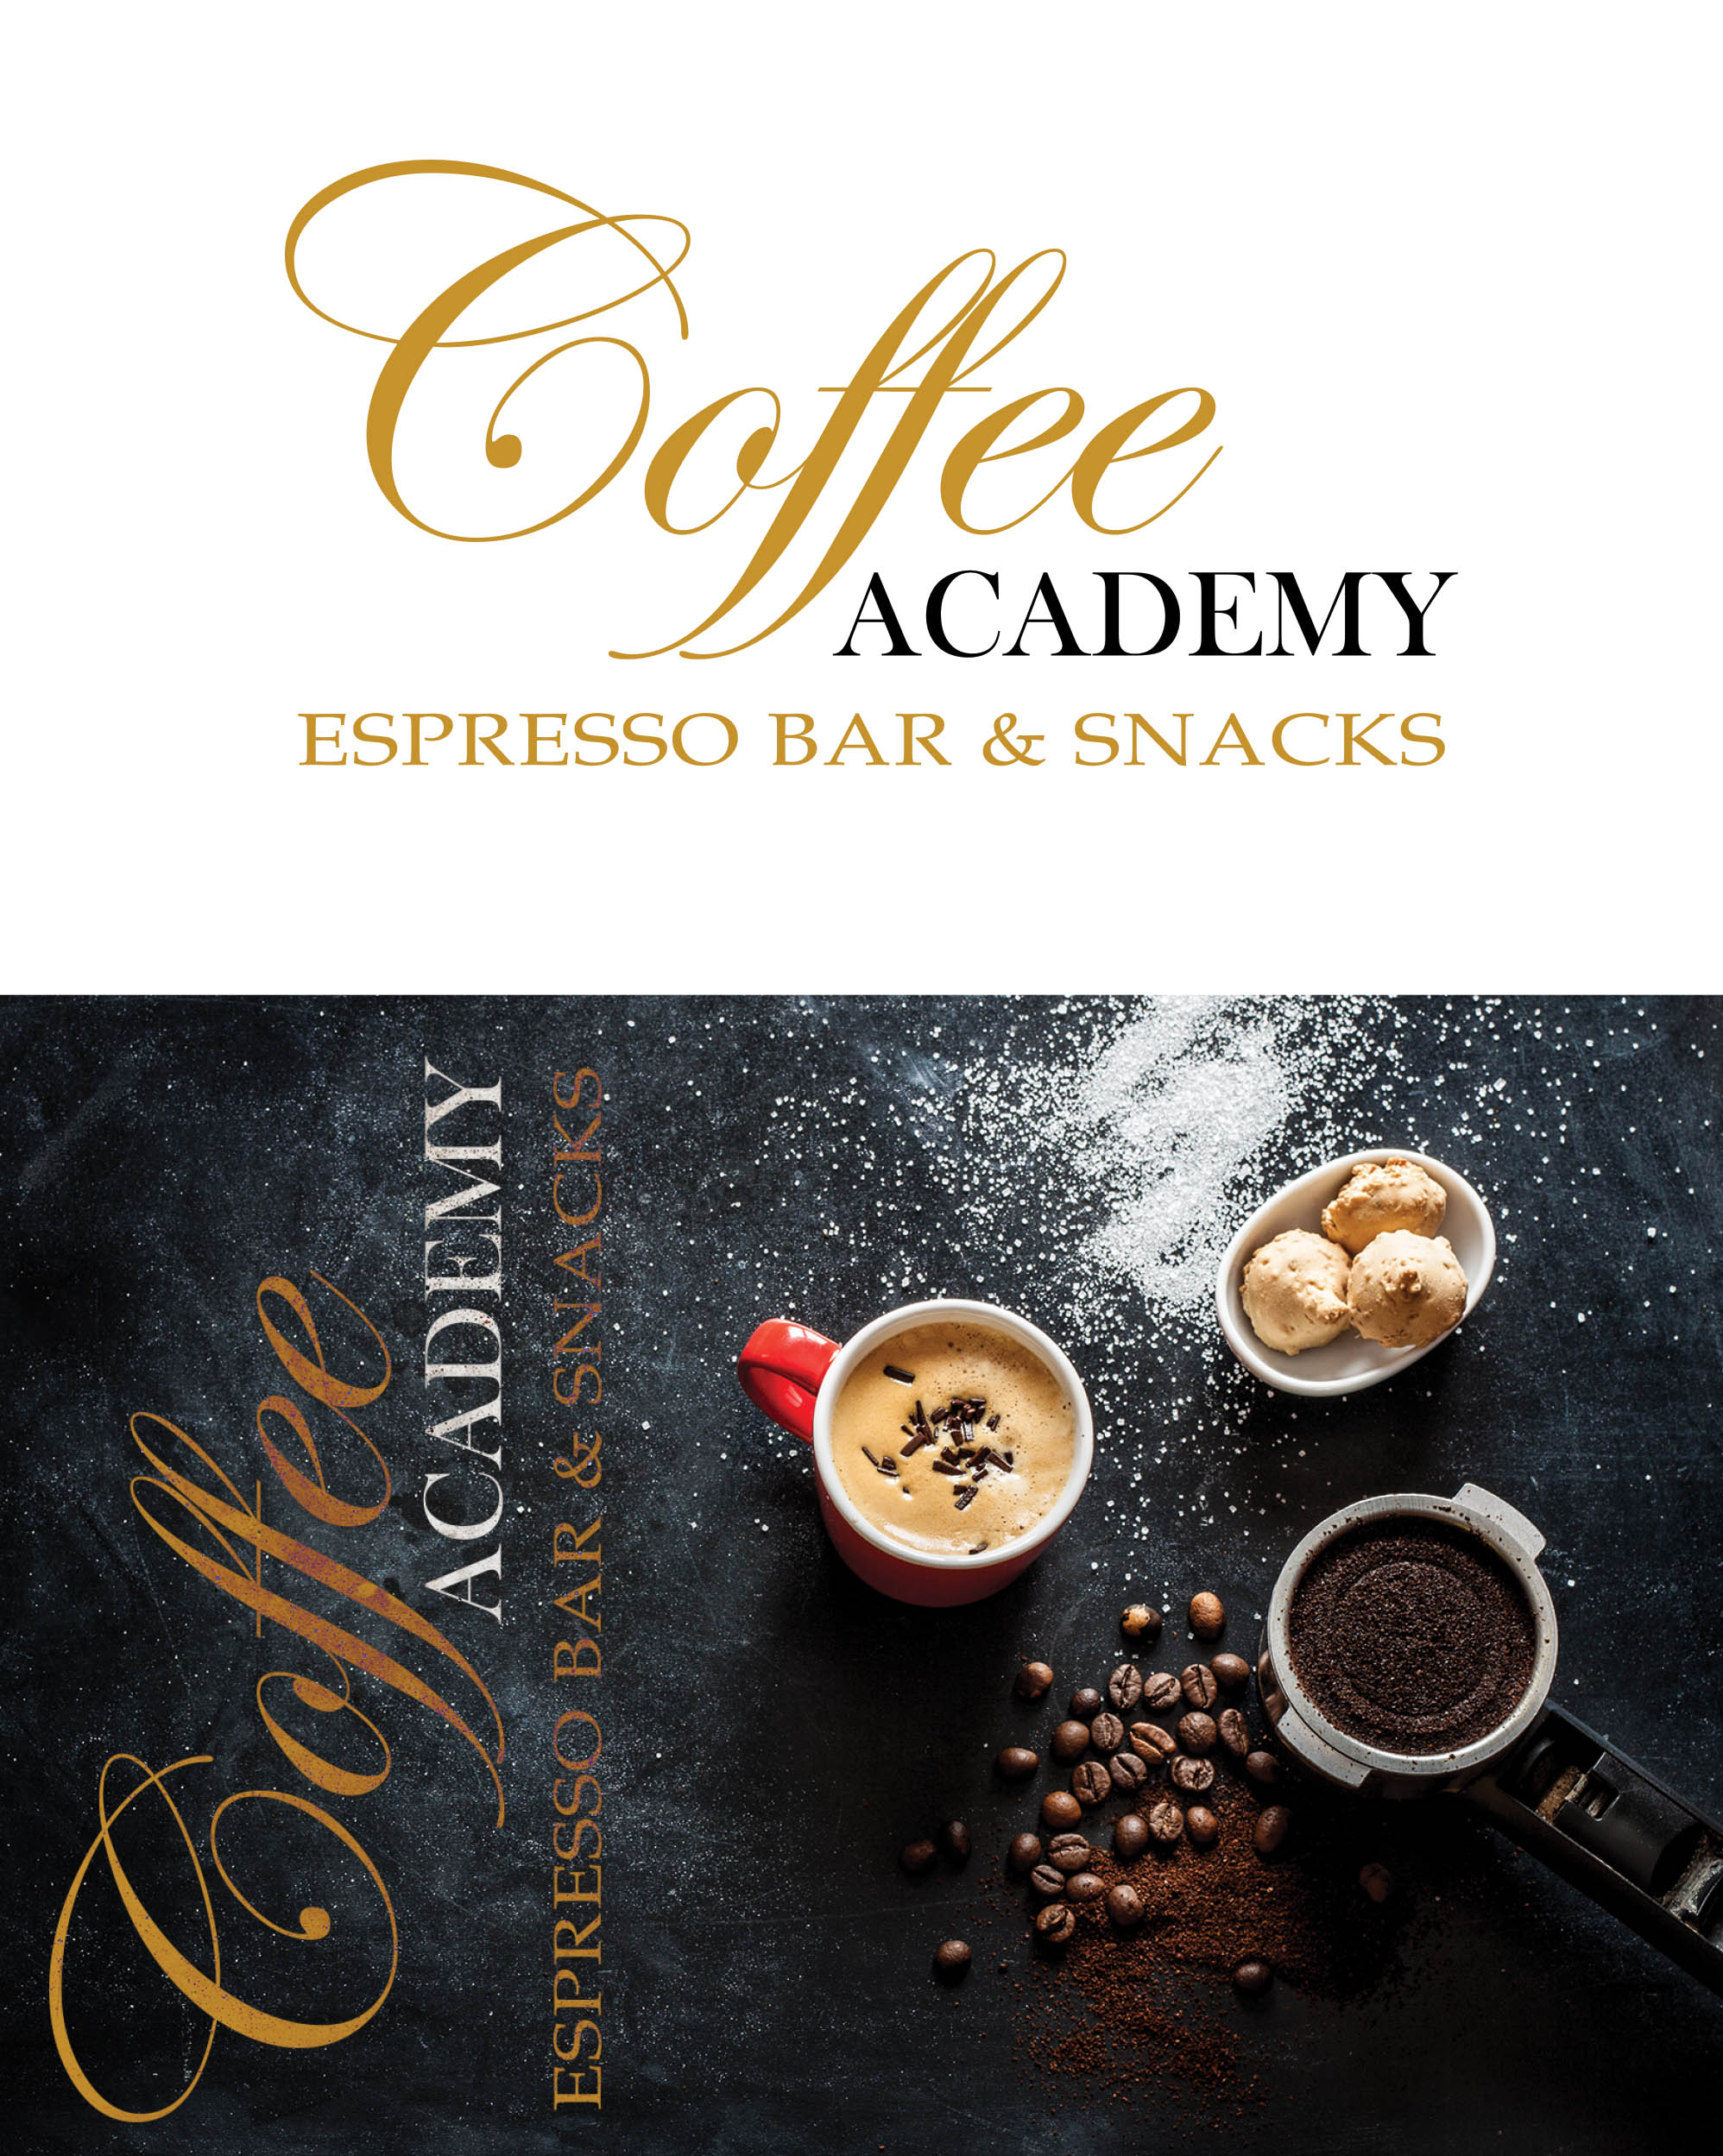 Coffee Academy logo